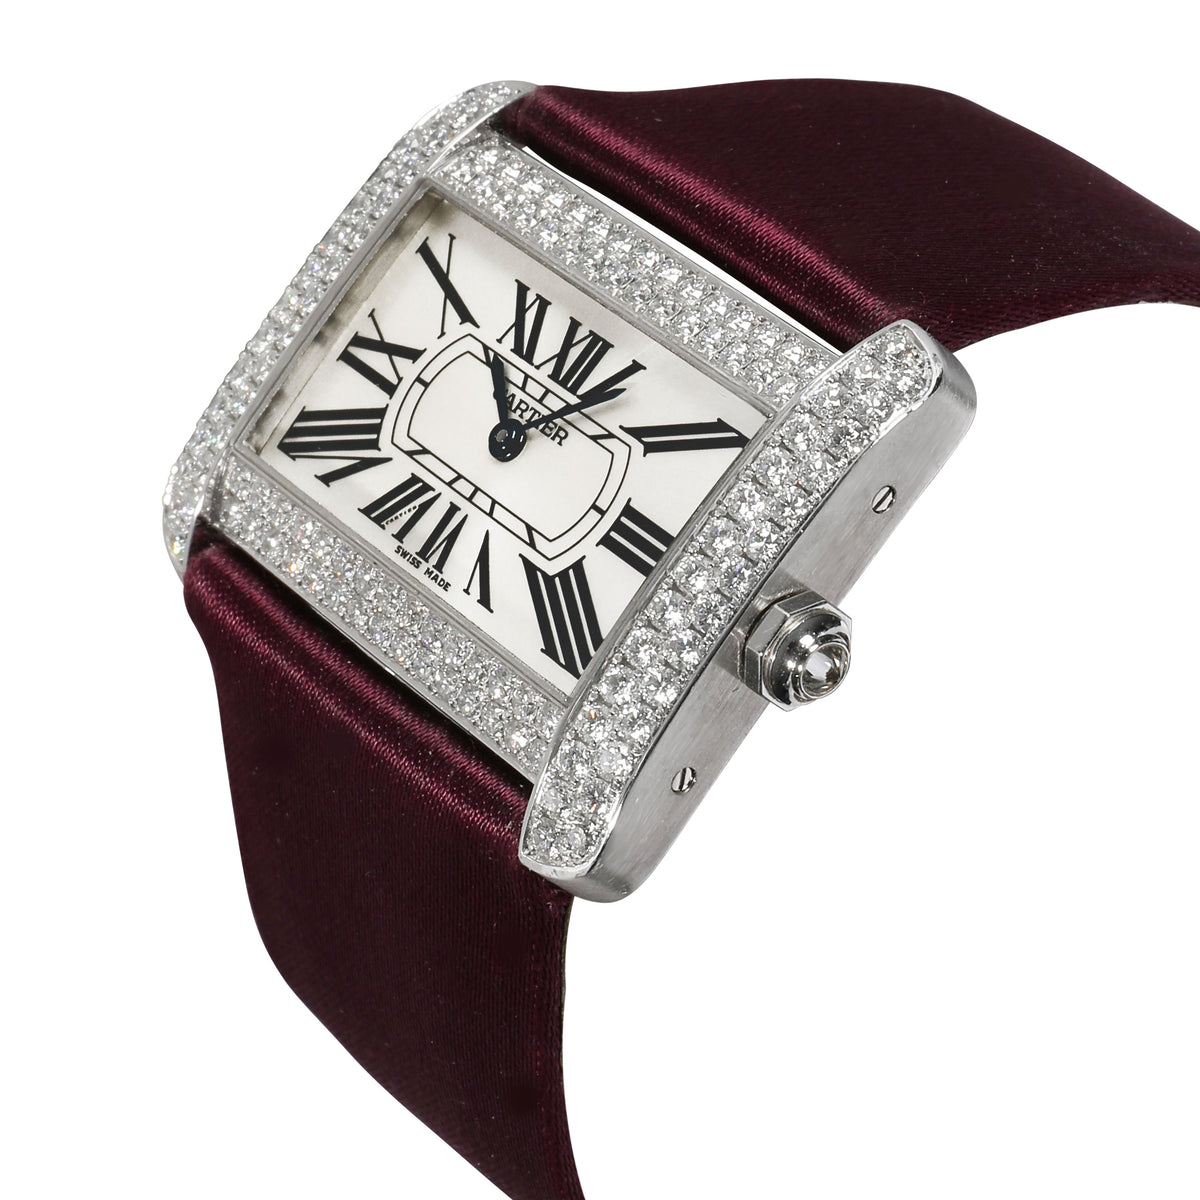 Cartier Tank Divan WA301370 Women's Watch in 18kt White Gold